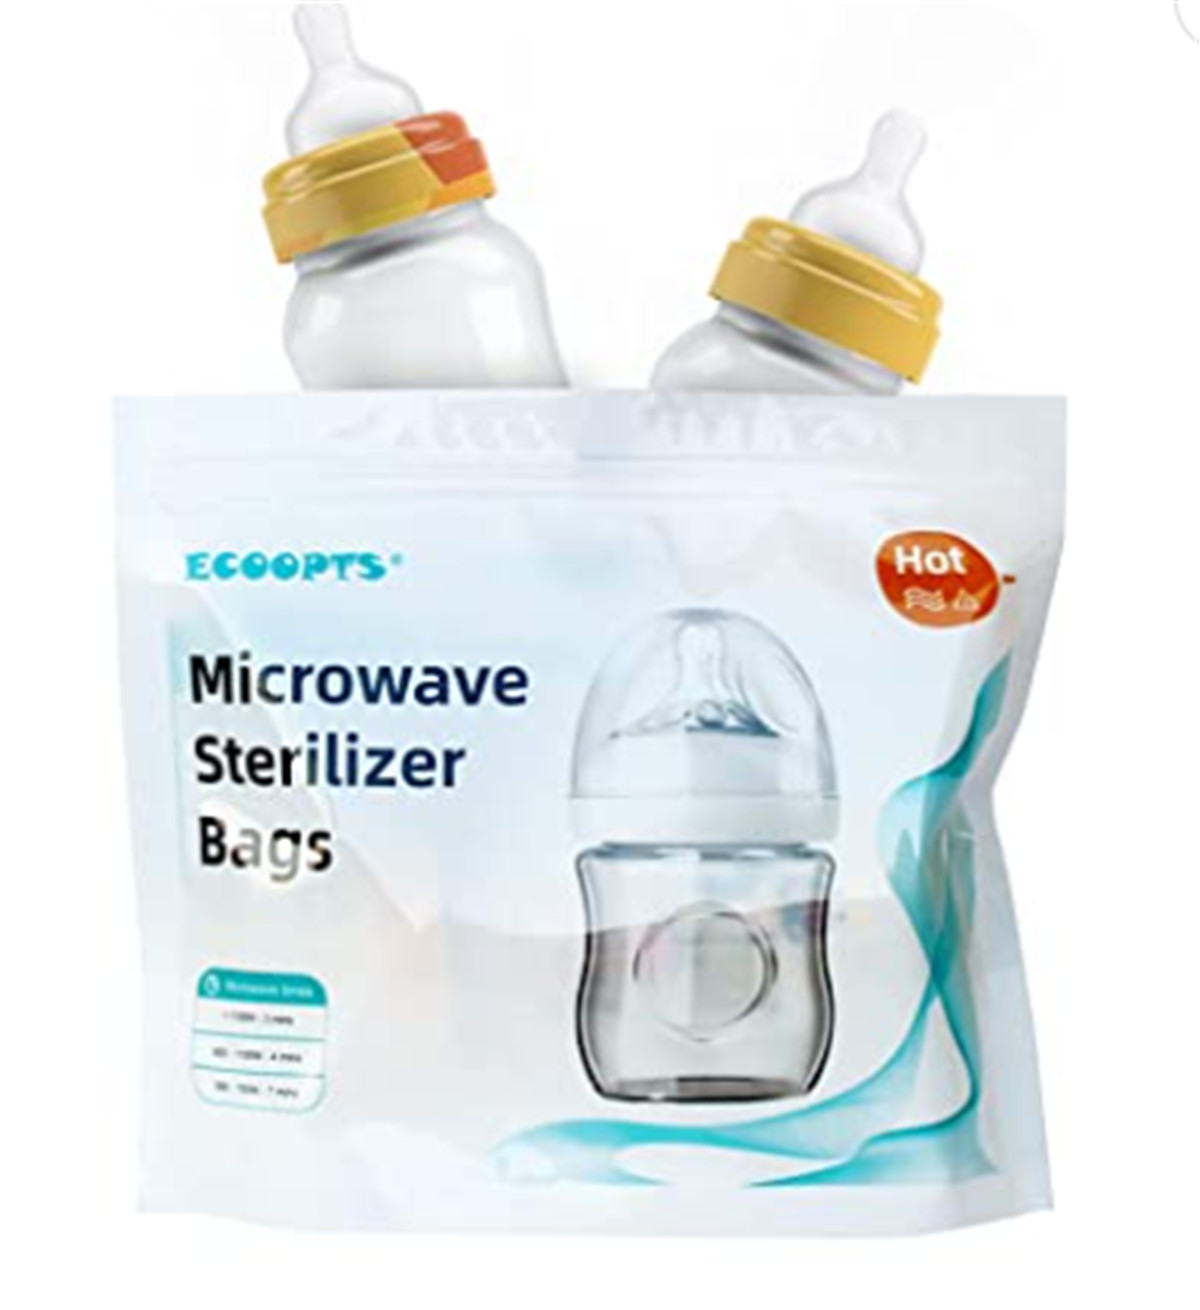 Microwave Bottle Sterilizer Bags Sterilizer Bags for Baby Bottles - 400 ການນໍາໃຊ້ - ຖົງໄອນ້ໍາໄມໂຄເວຟທີ່ນໍາມາໃຊ້ຄືນໄດ້ສໍາລັບຂວດເດັກນ້ອຍ - ຖົງປ້ໍານົມ - ຖົງຂ້າເຊື້ອໄມໂຄເວຟ (5)